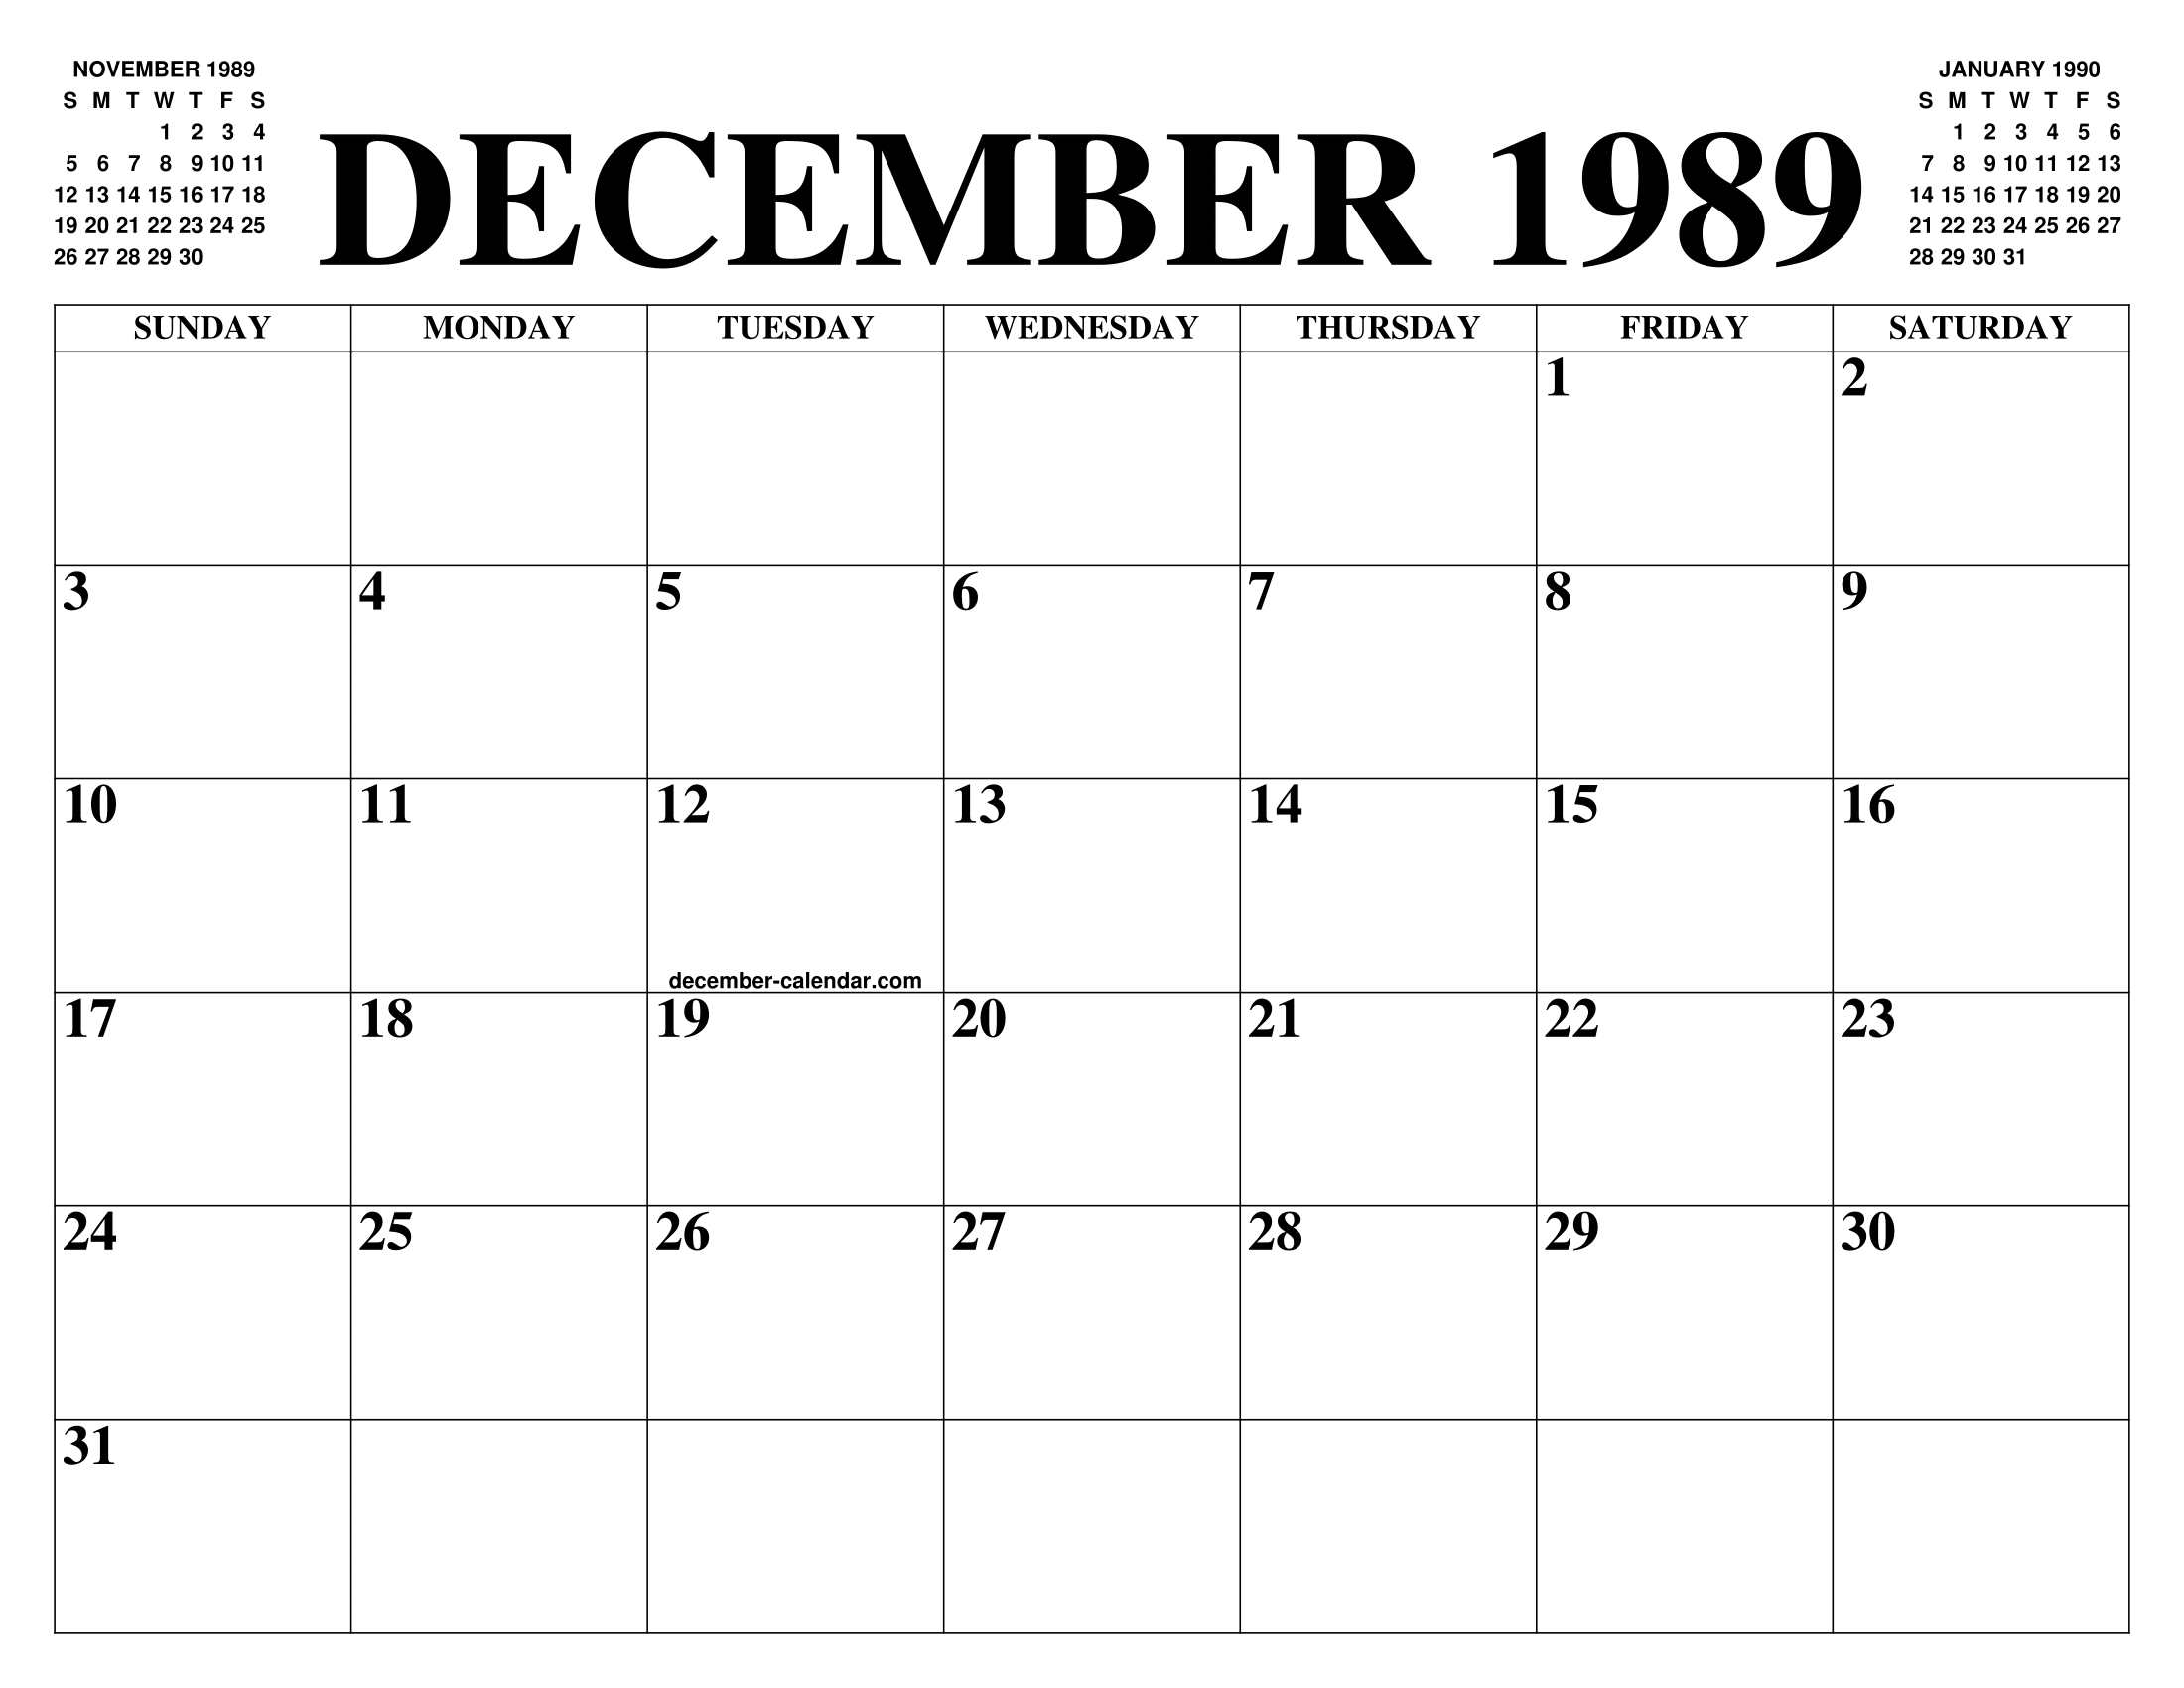 DECEMBER 1989 CALENDAR OF THE MONTH: FREE PRINTABLE DECEMBER CALENDAR